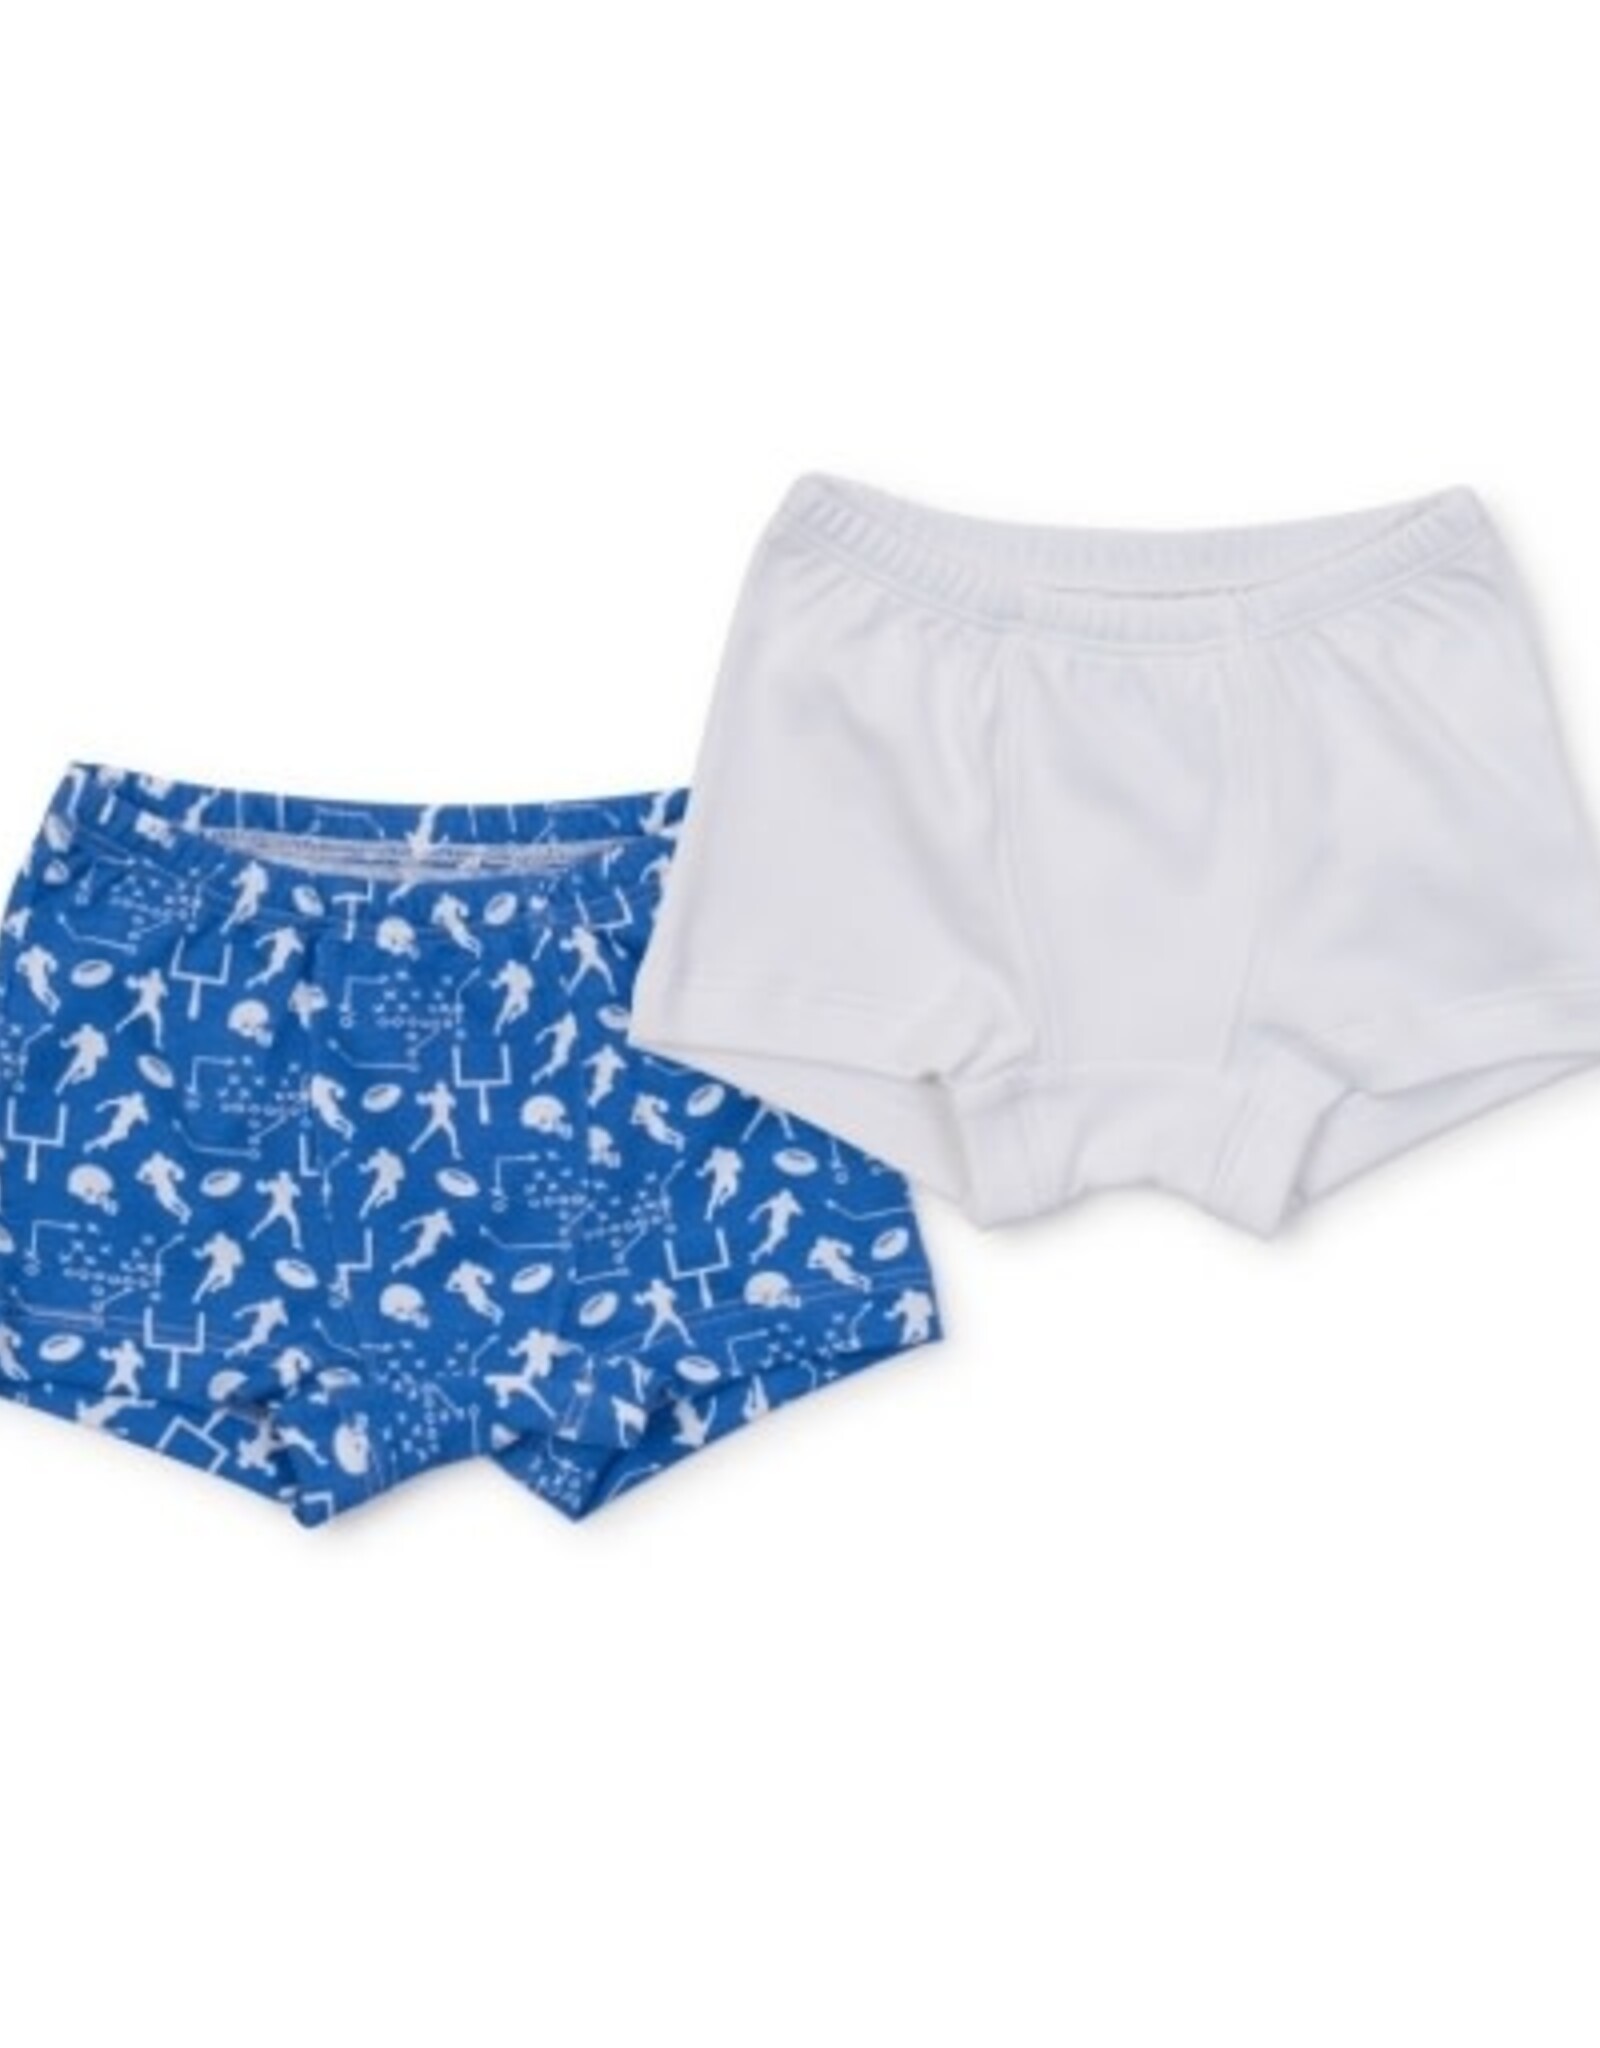 Lila + Hayes James Underwear Set of 2, Football/White